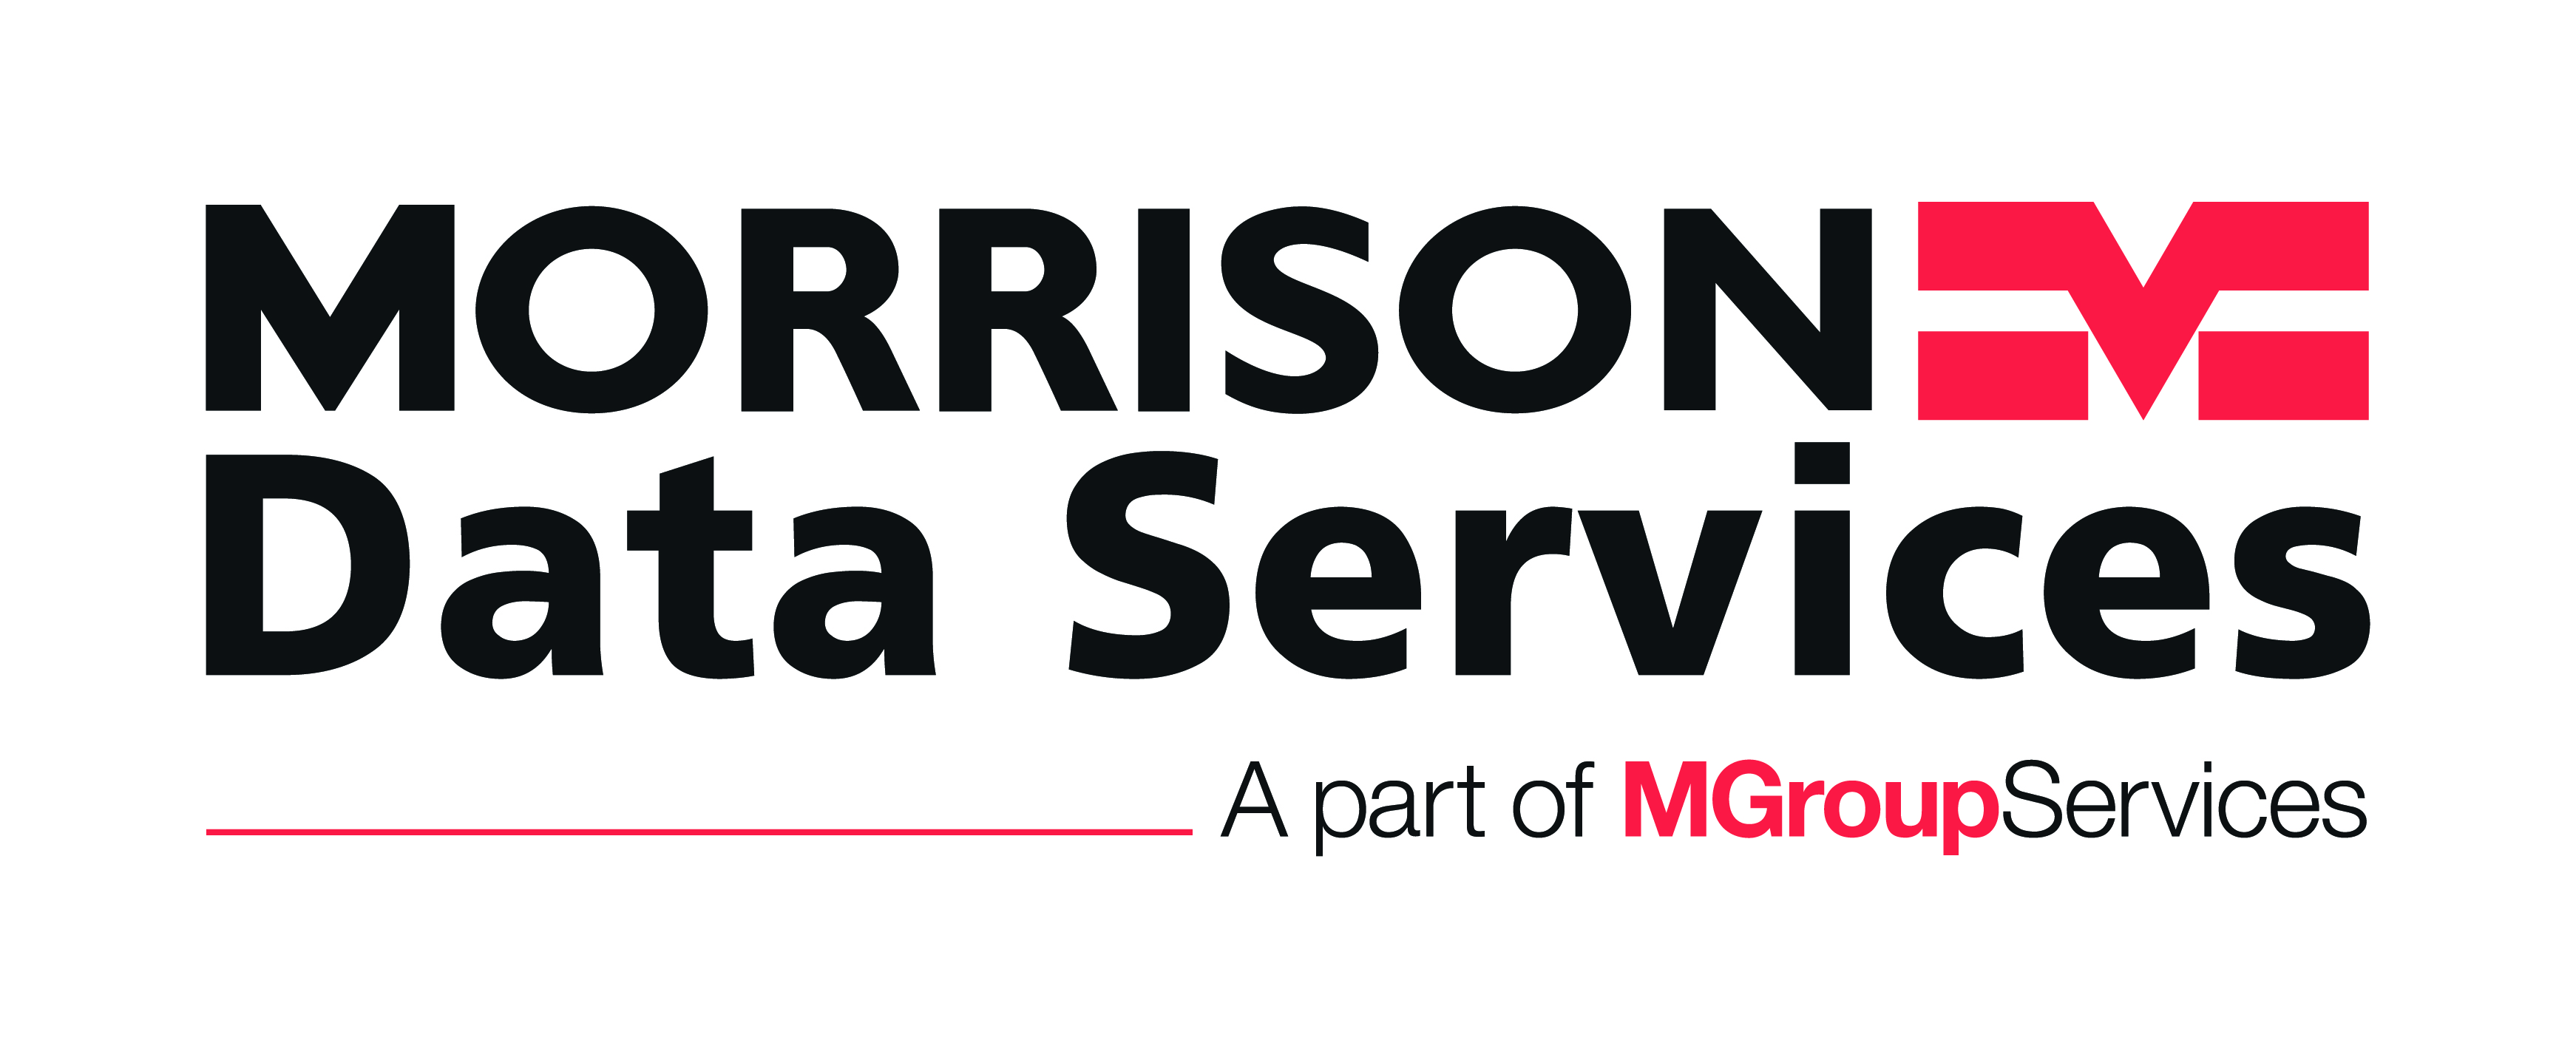 Morrison Data Services Logo CMYK